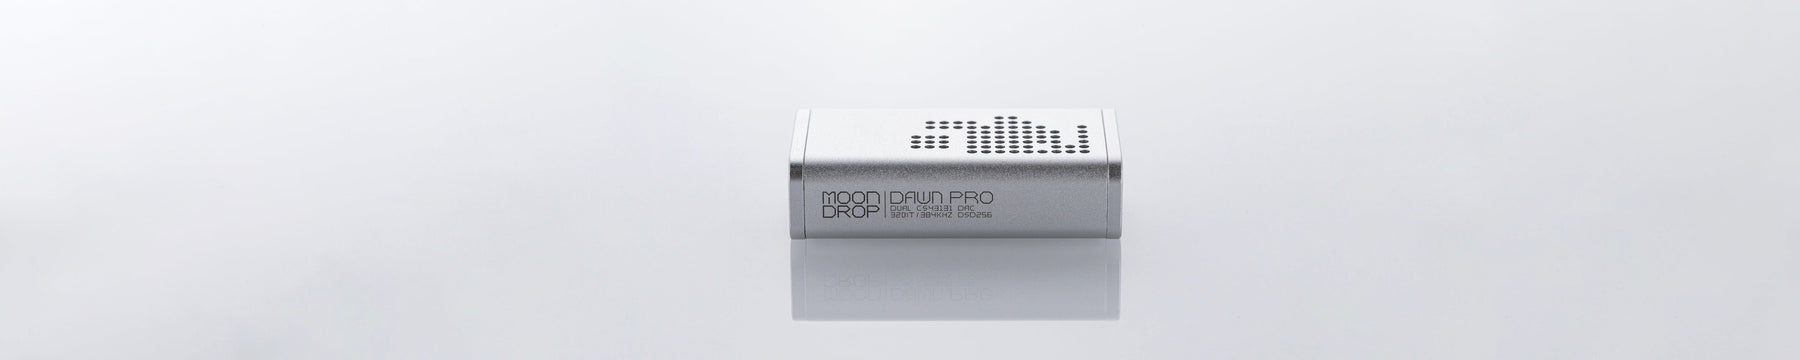 Moondrop Launches DAWN Pro Dual CS43131 DAC Portable USB DAC/AMP